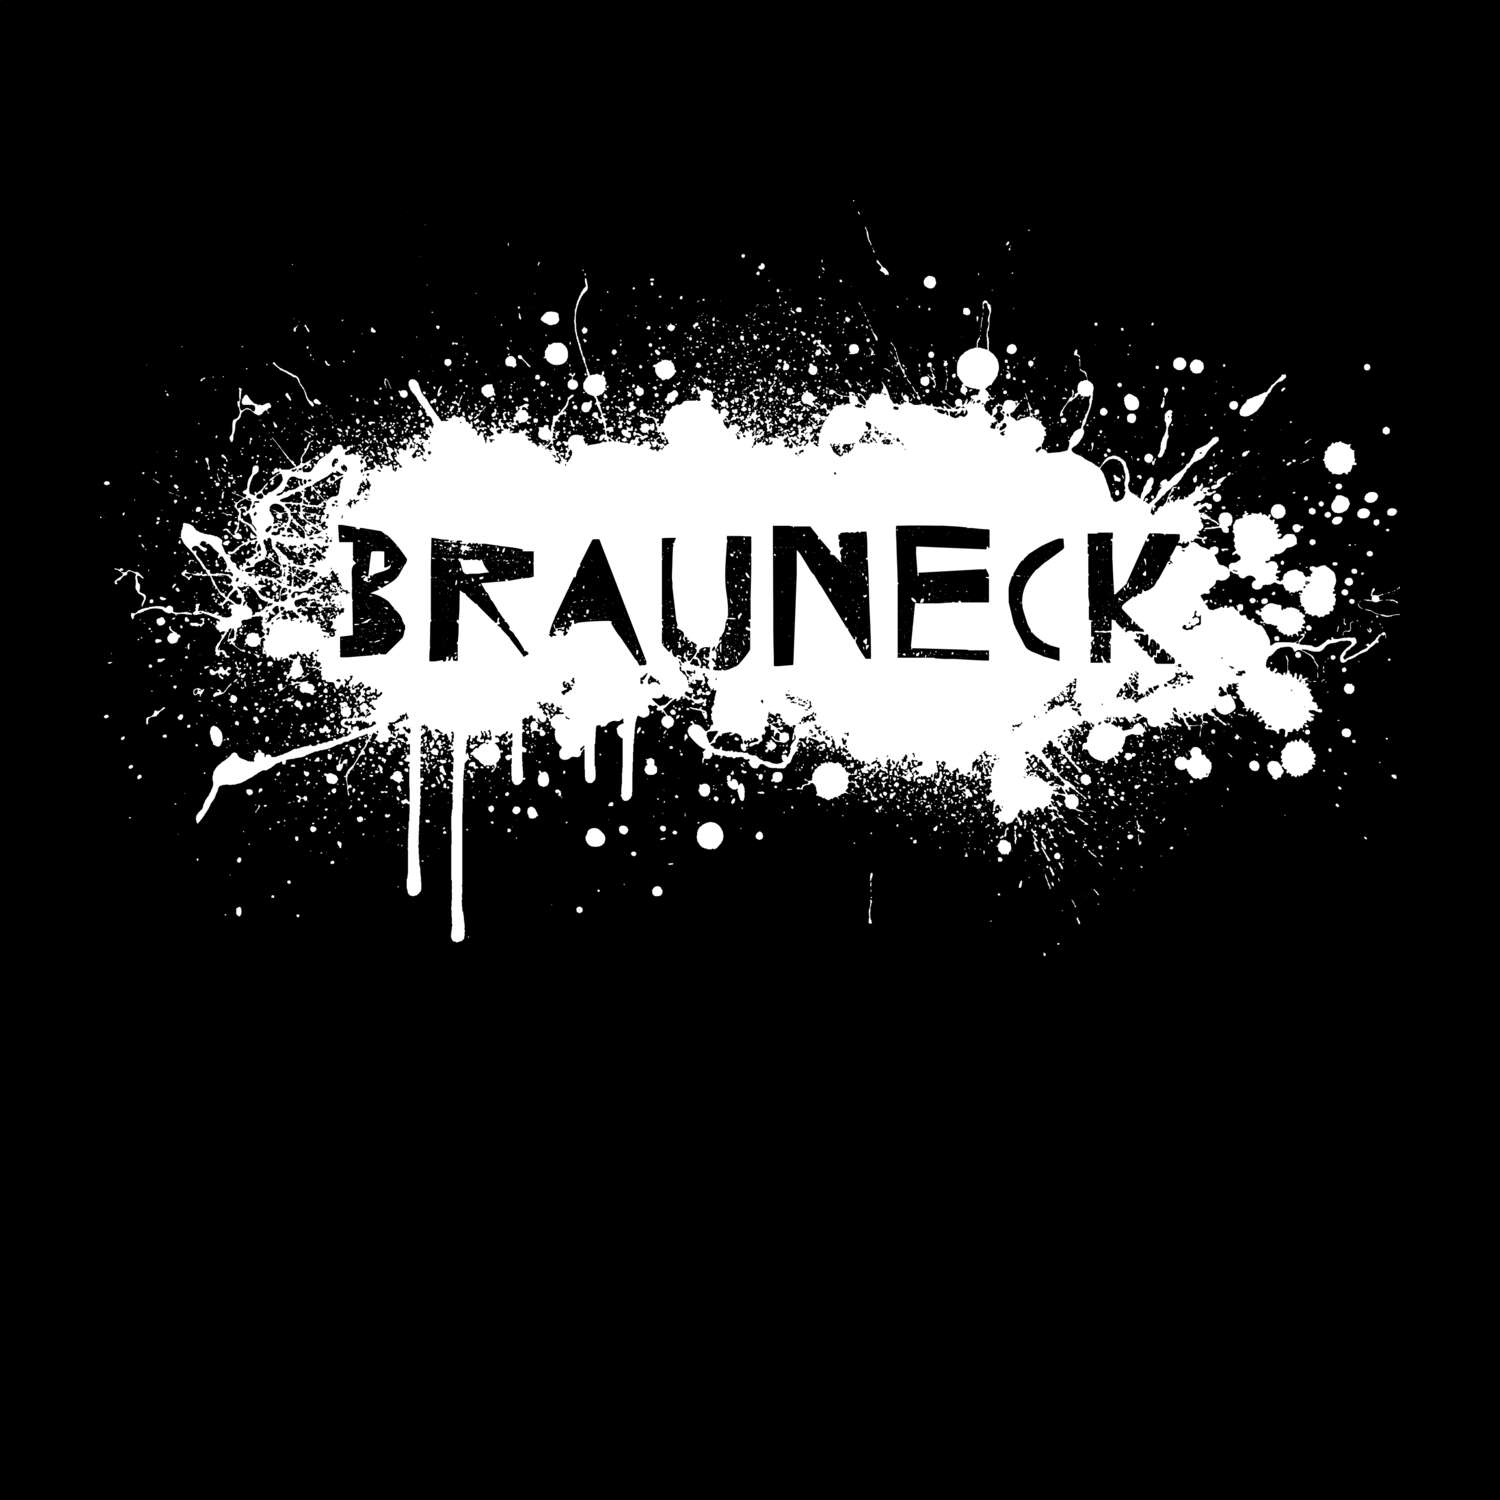 Brauneck T-Shirt »Paint Splash Punk«